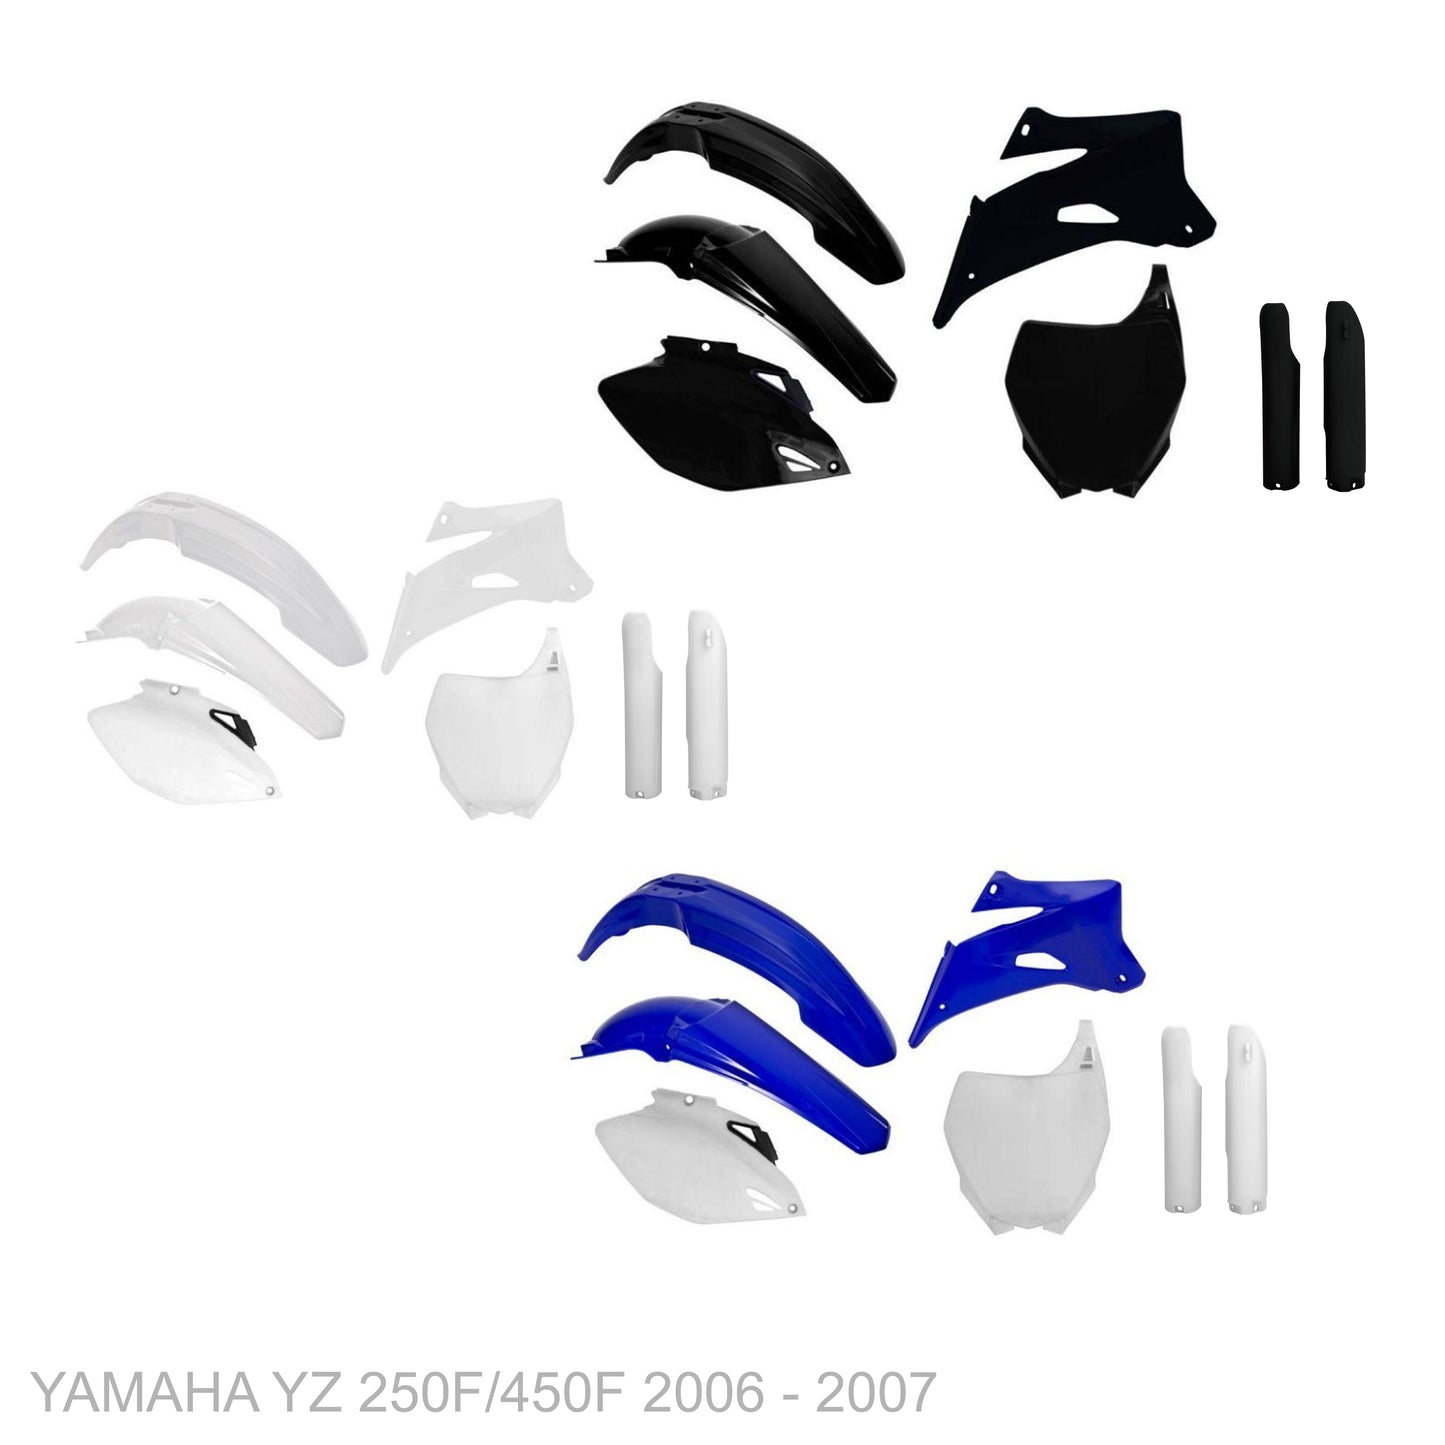 YAMAHA YZ 250F 2006 - 2007 Start From Scratch Graphics Kits